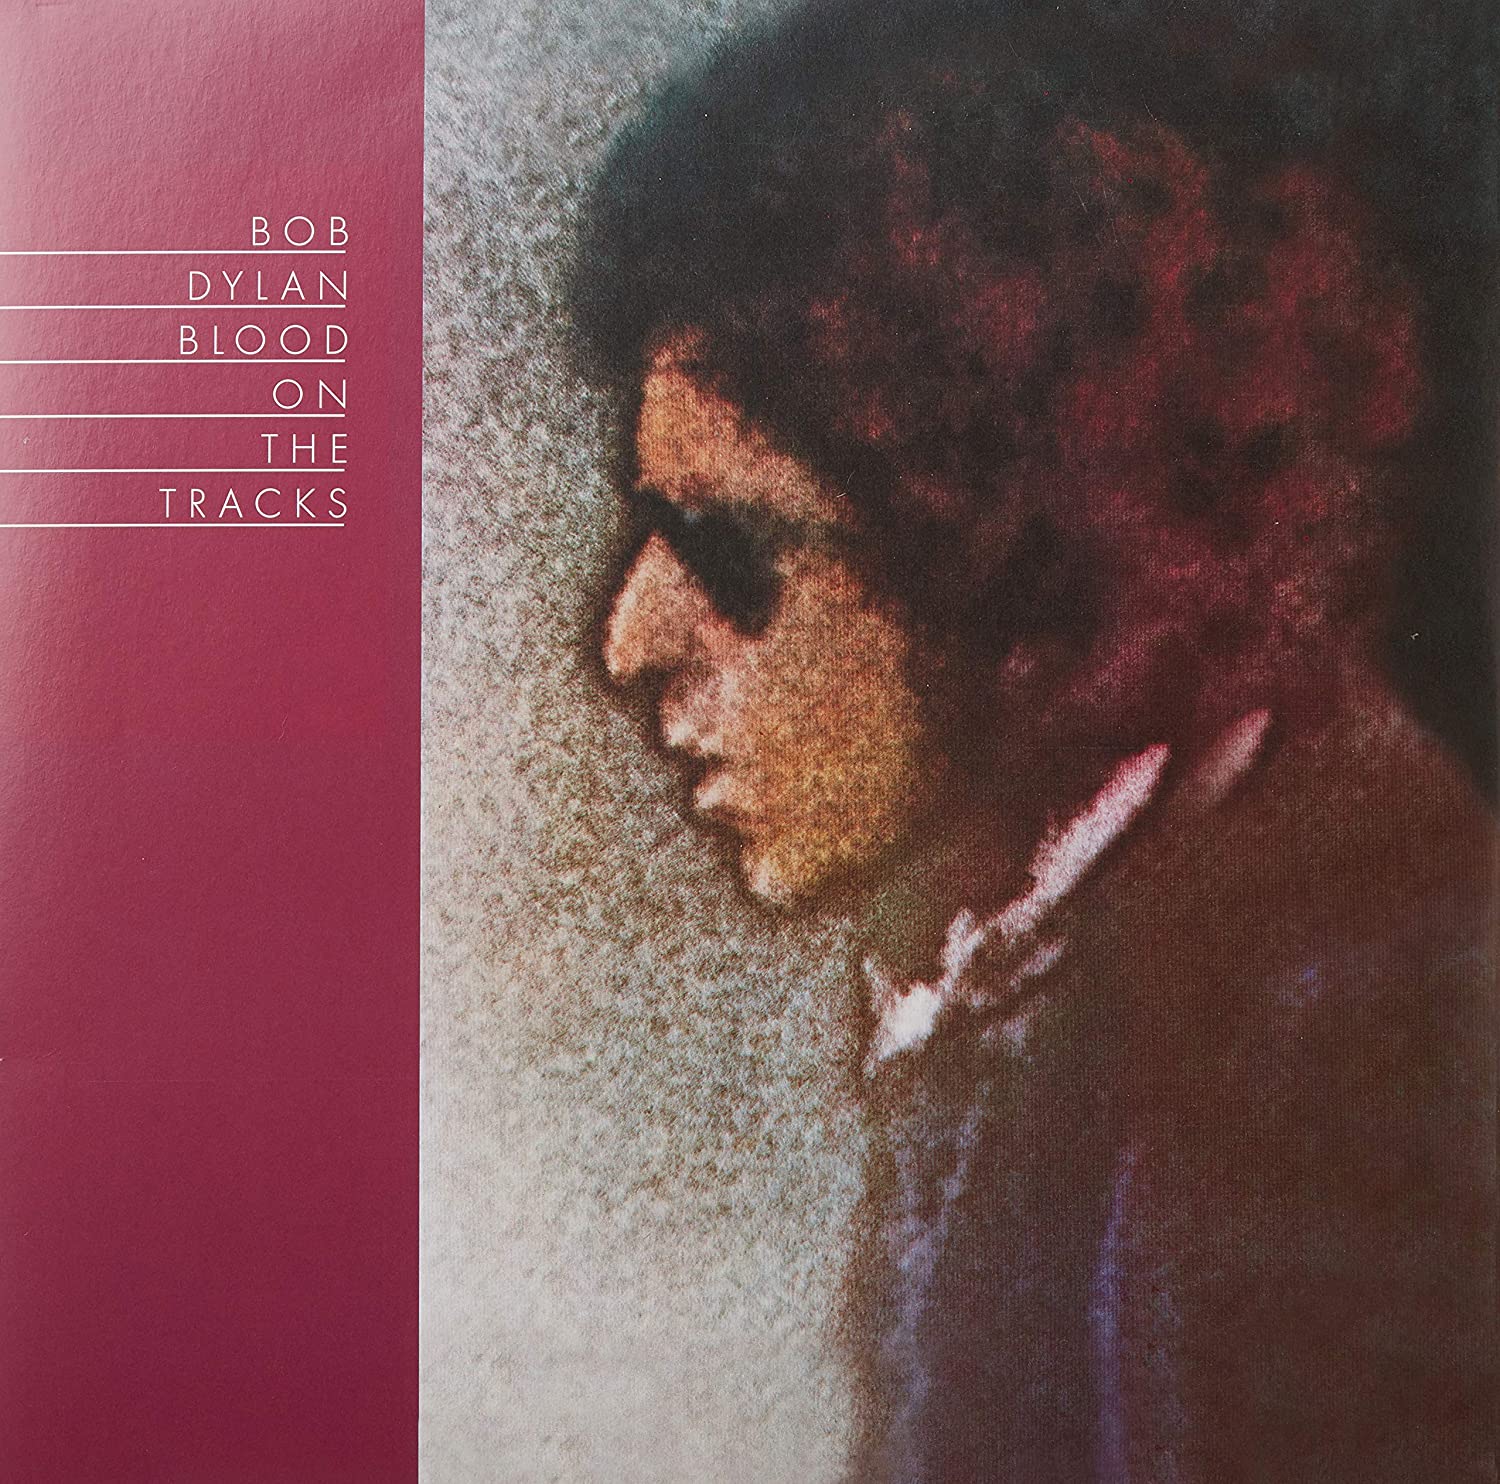 Iconic 1974 album on Vinyl from Bob Dylan.